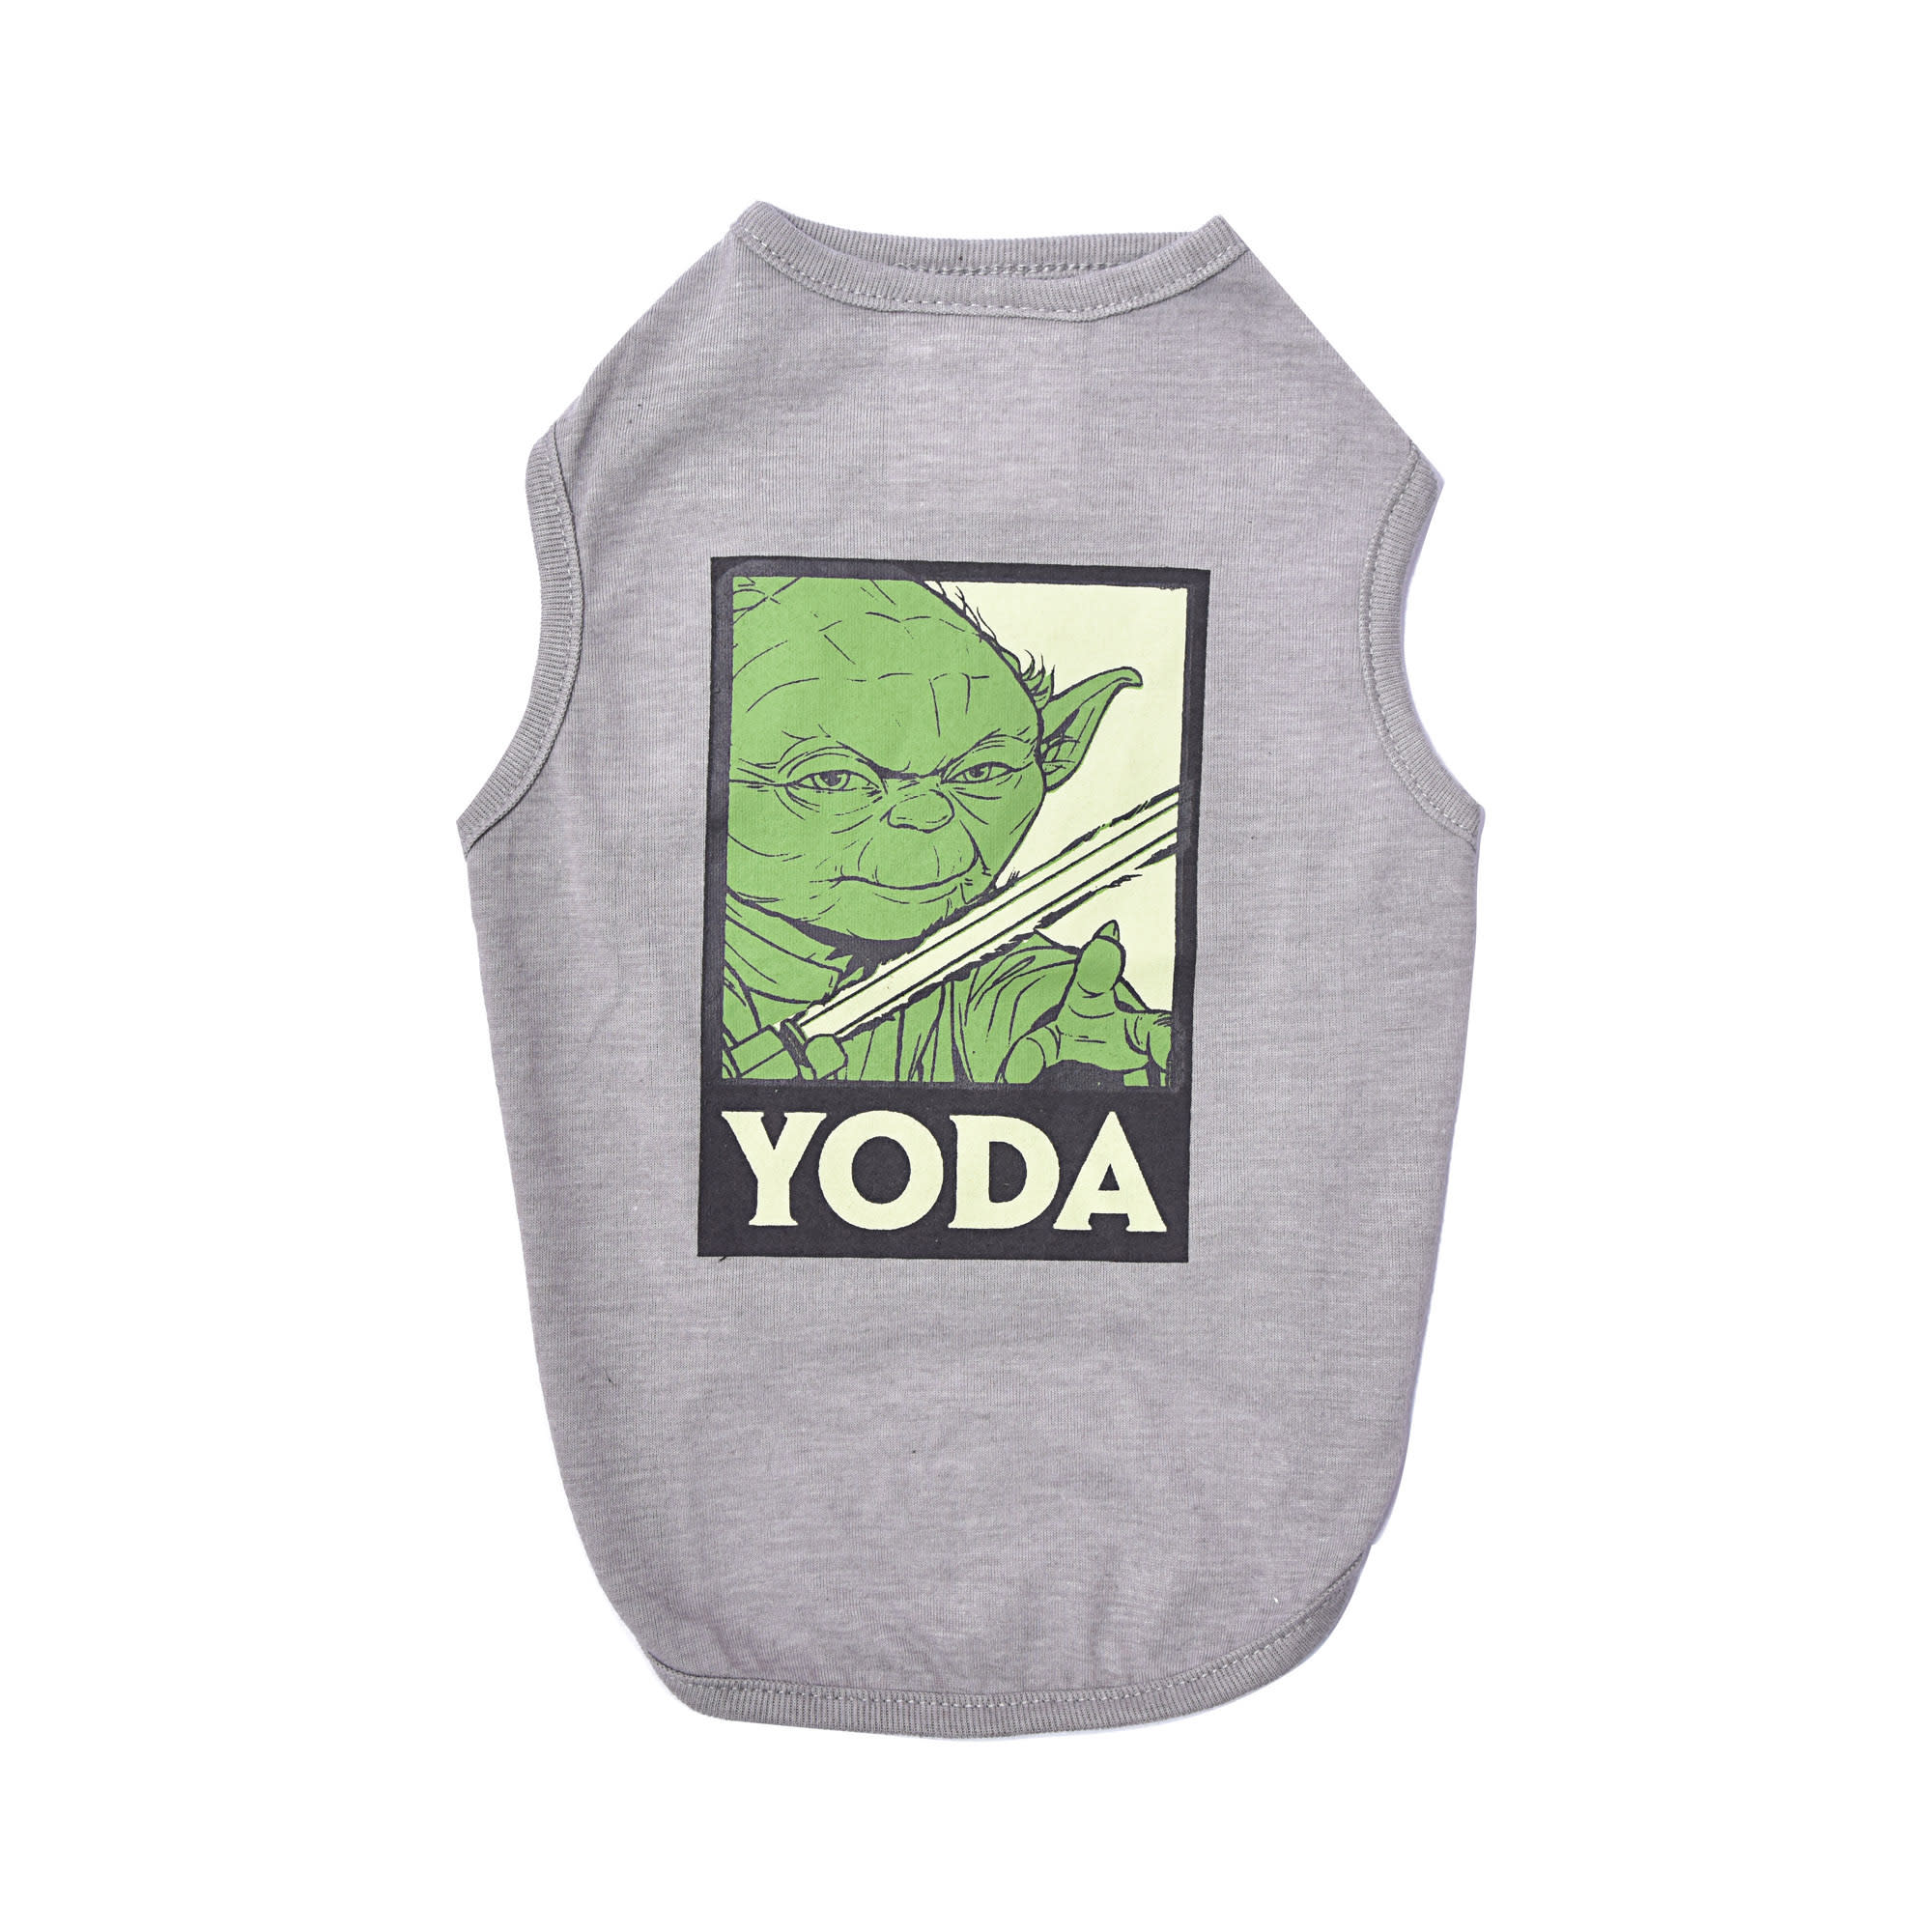 Fetch for Pets Star Wars Gray Yoda Tank Dog T-Shirt, X-Large